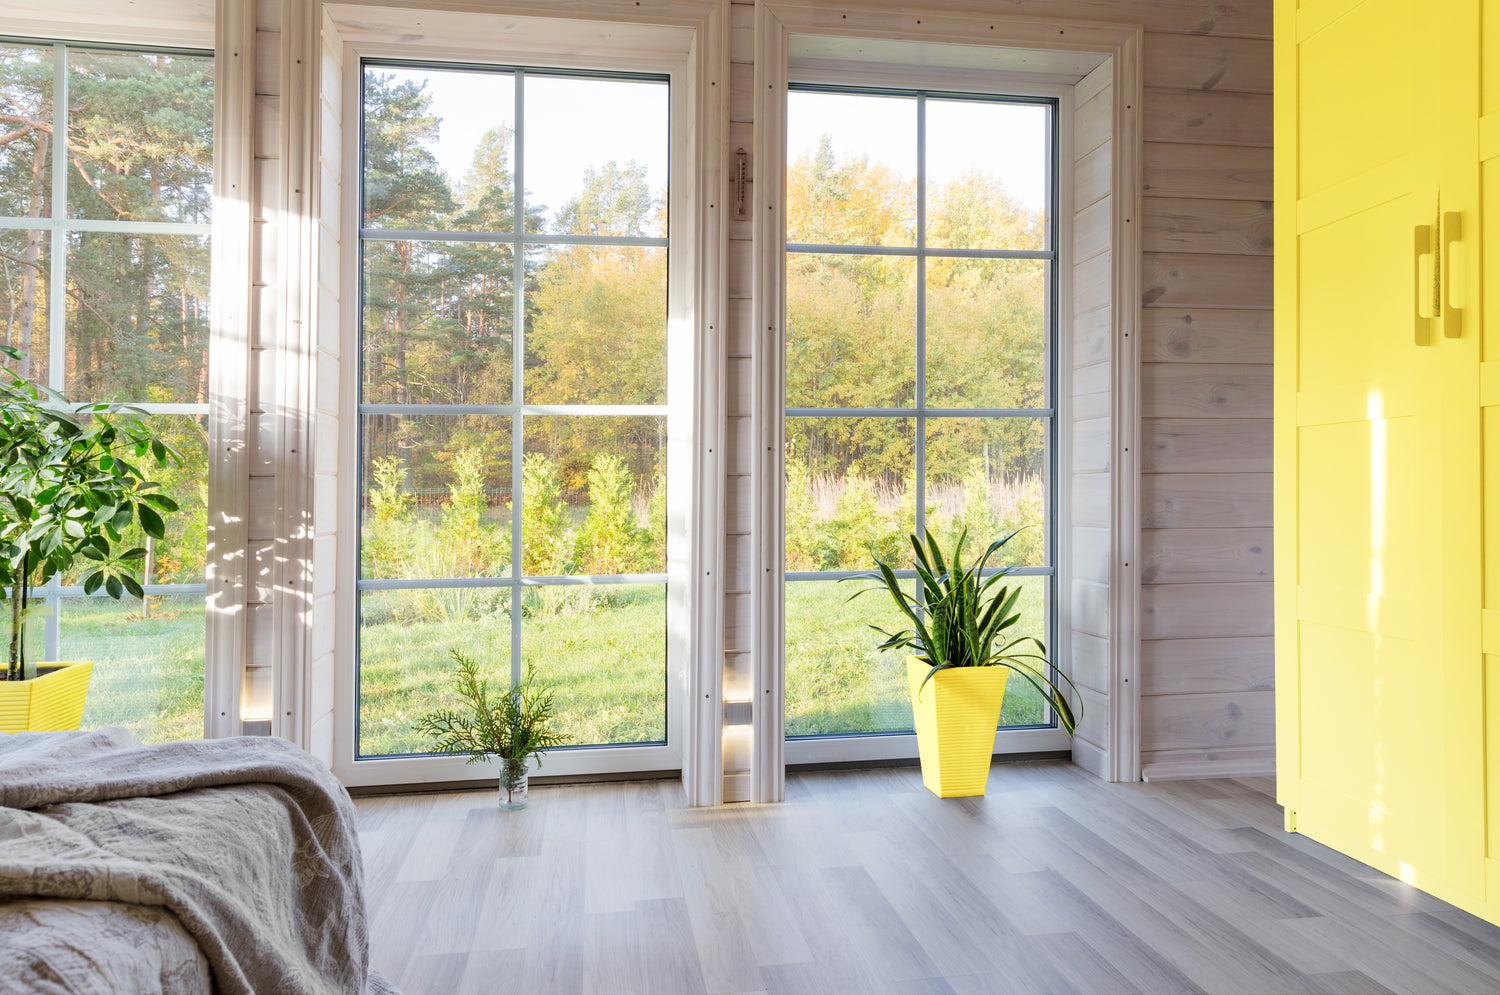 How Do You Make Grey Wood Floors Look Good?